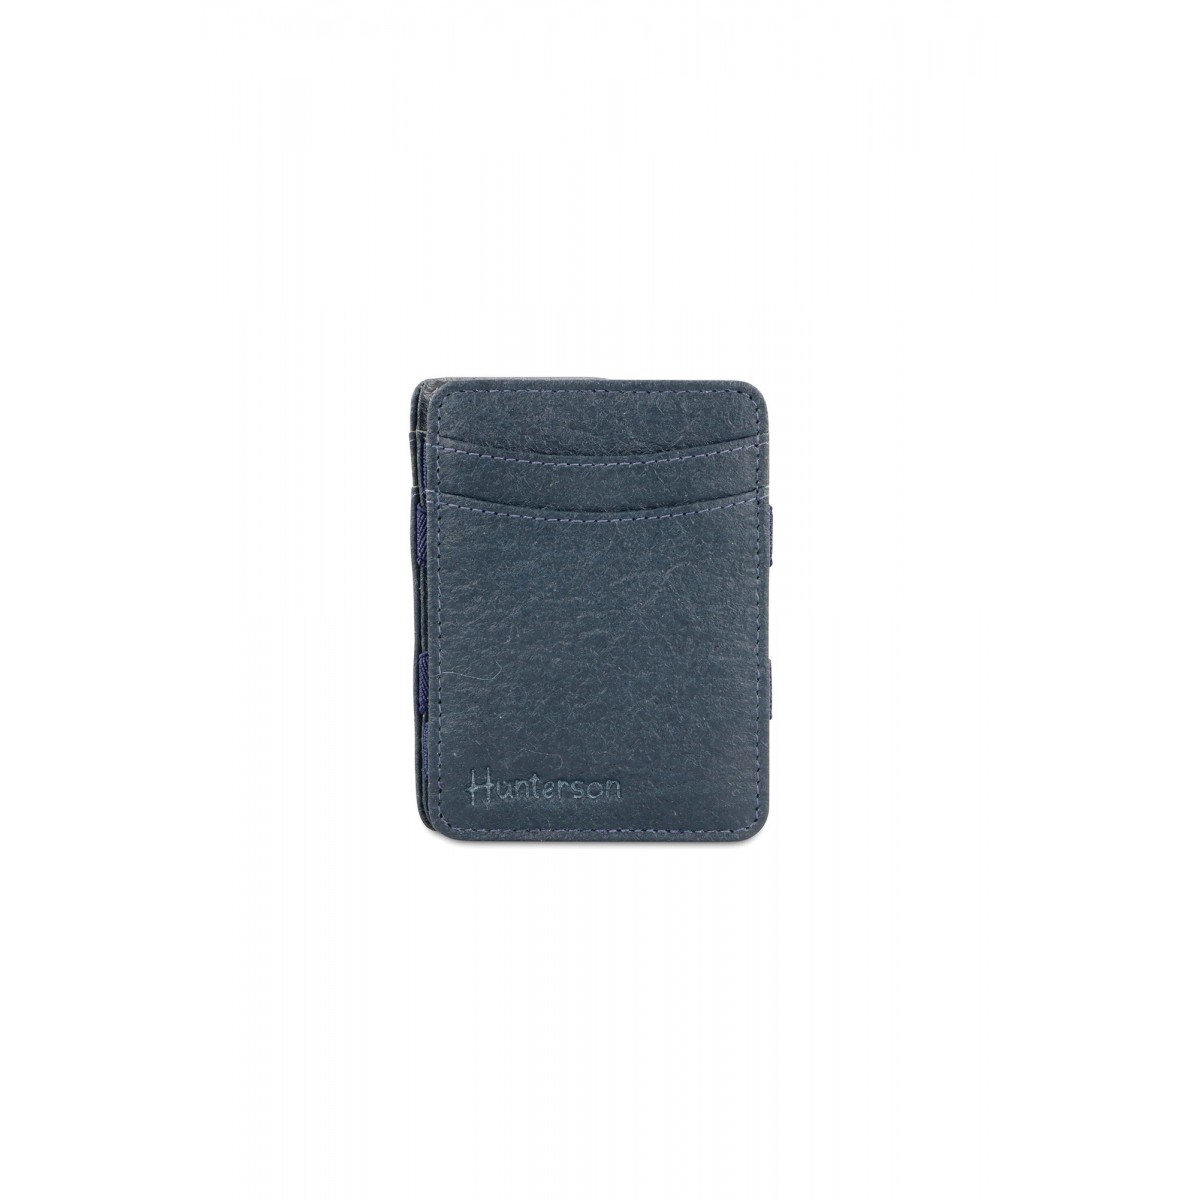 Hunterson Magic Coin Wallet - Vegan Πορτοφόλι με RFID - Navy Μπλε (Marine)